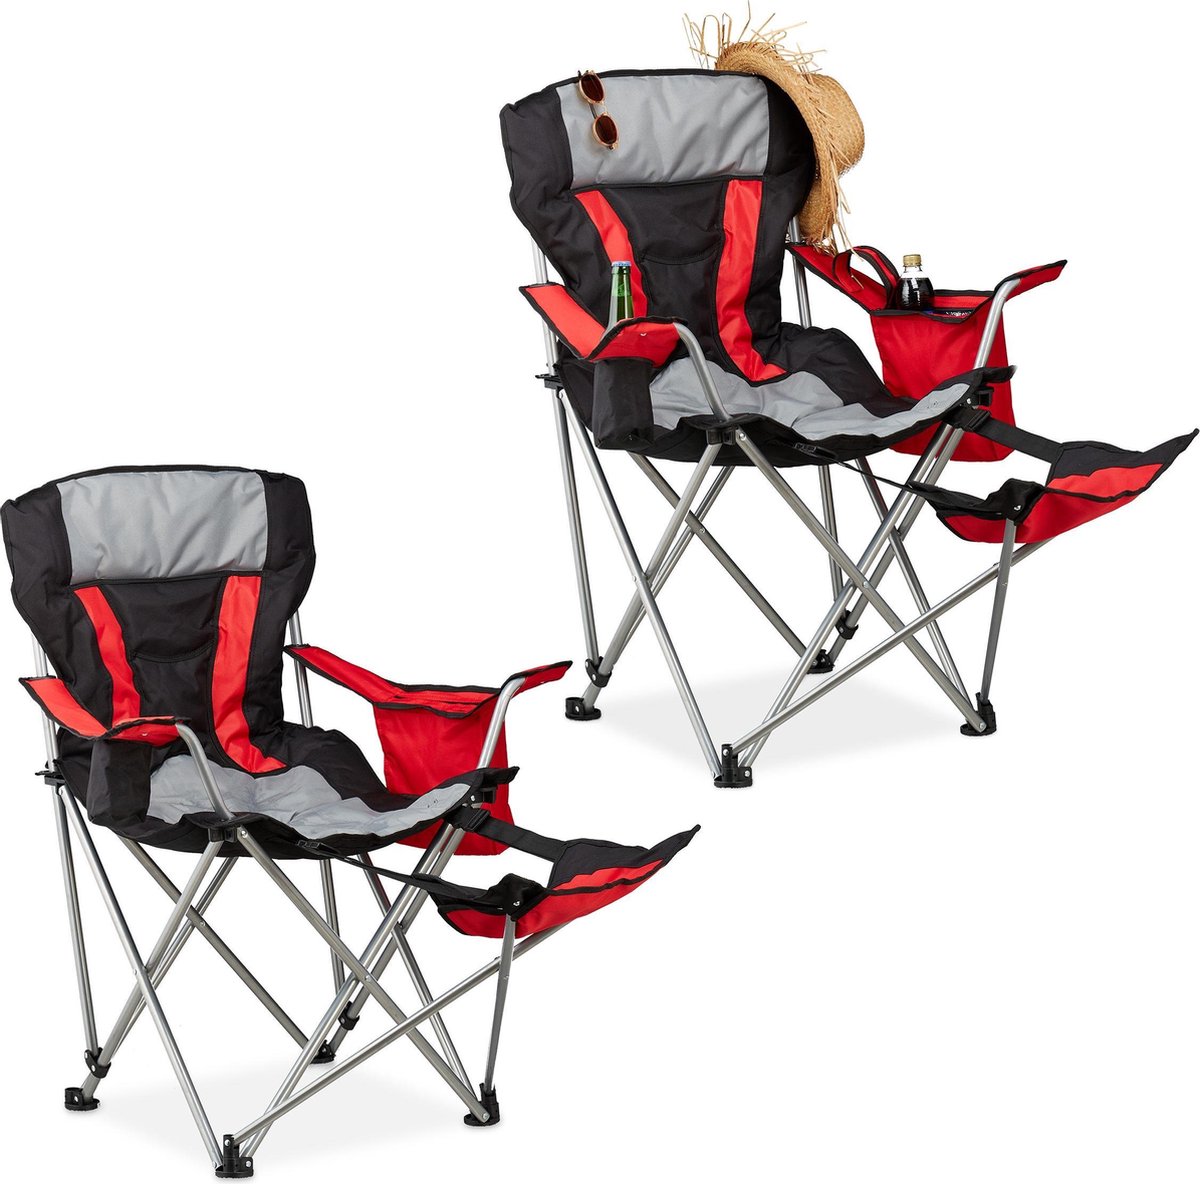 Relaxdays 2 x campingstoel met voetensteun - klapstoel - kampeerstoel - vouwstoel - 150kg